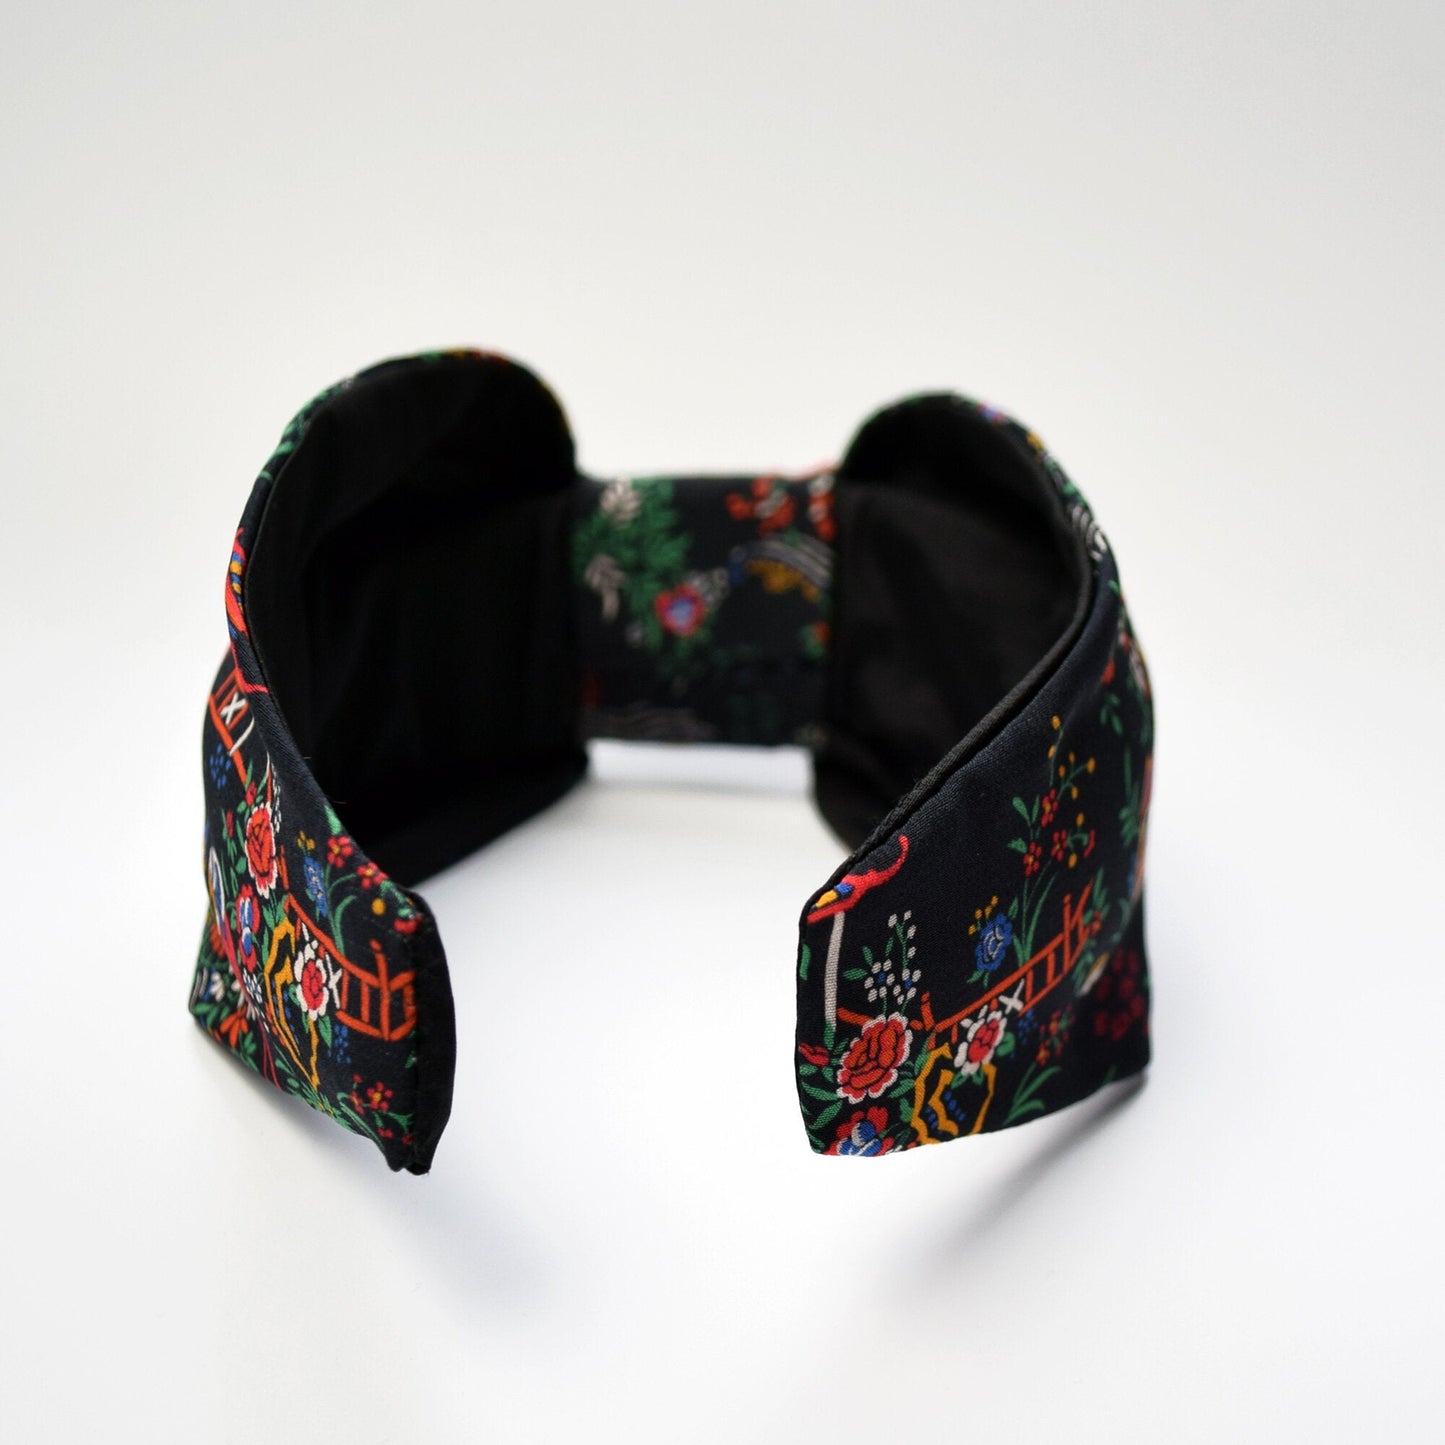 Liberty London Silk Headband - Peony Pavillion